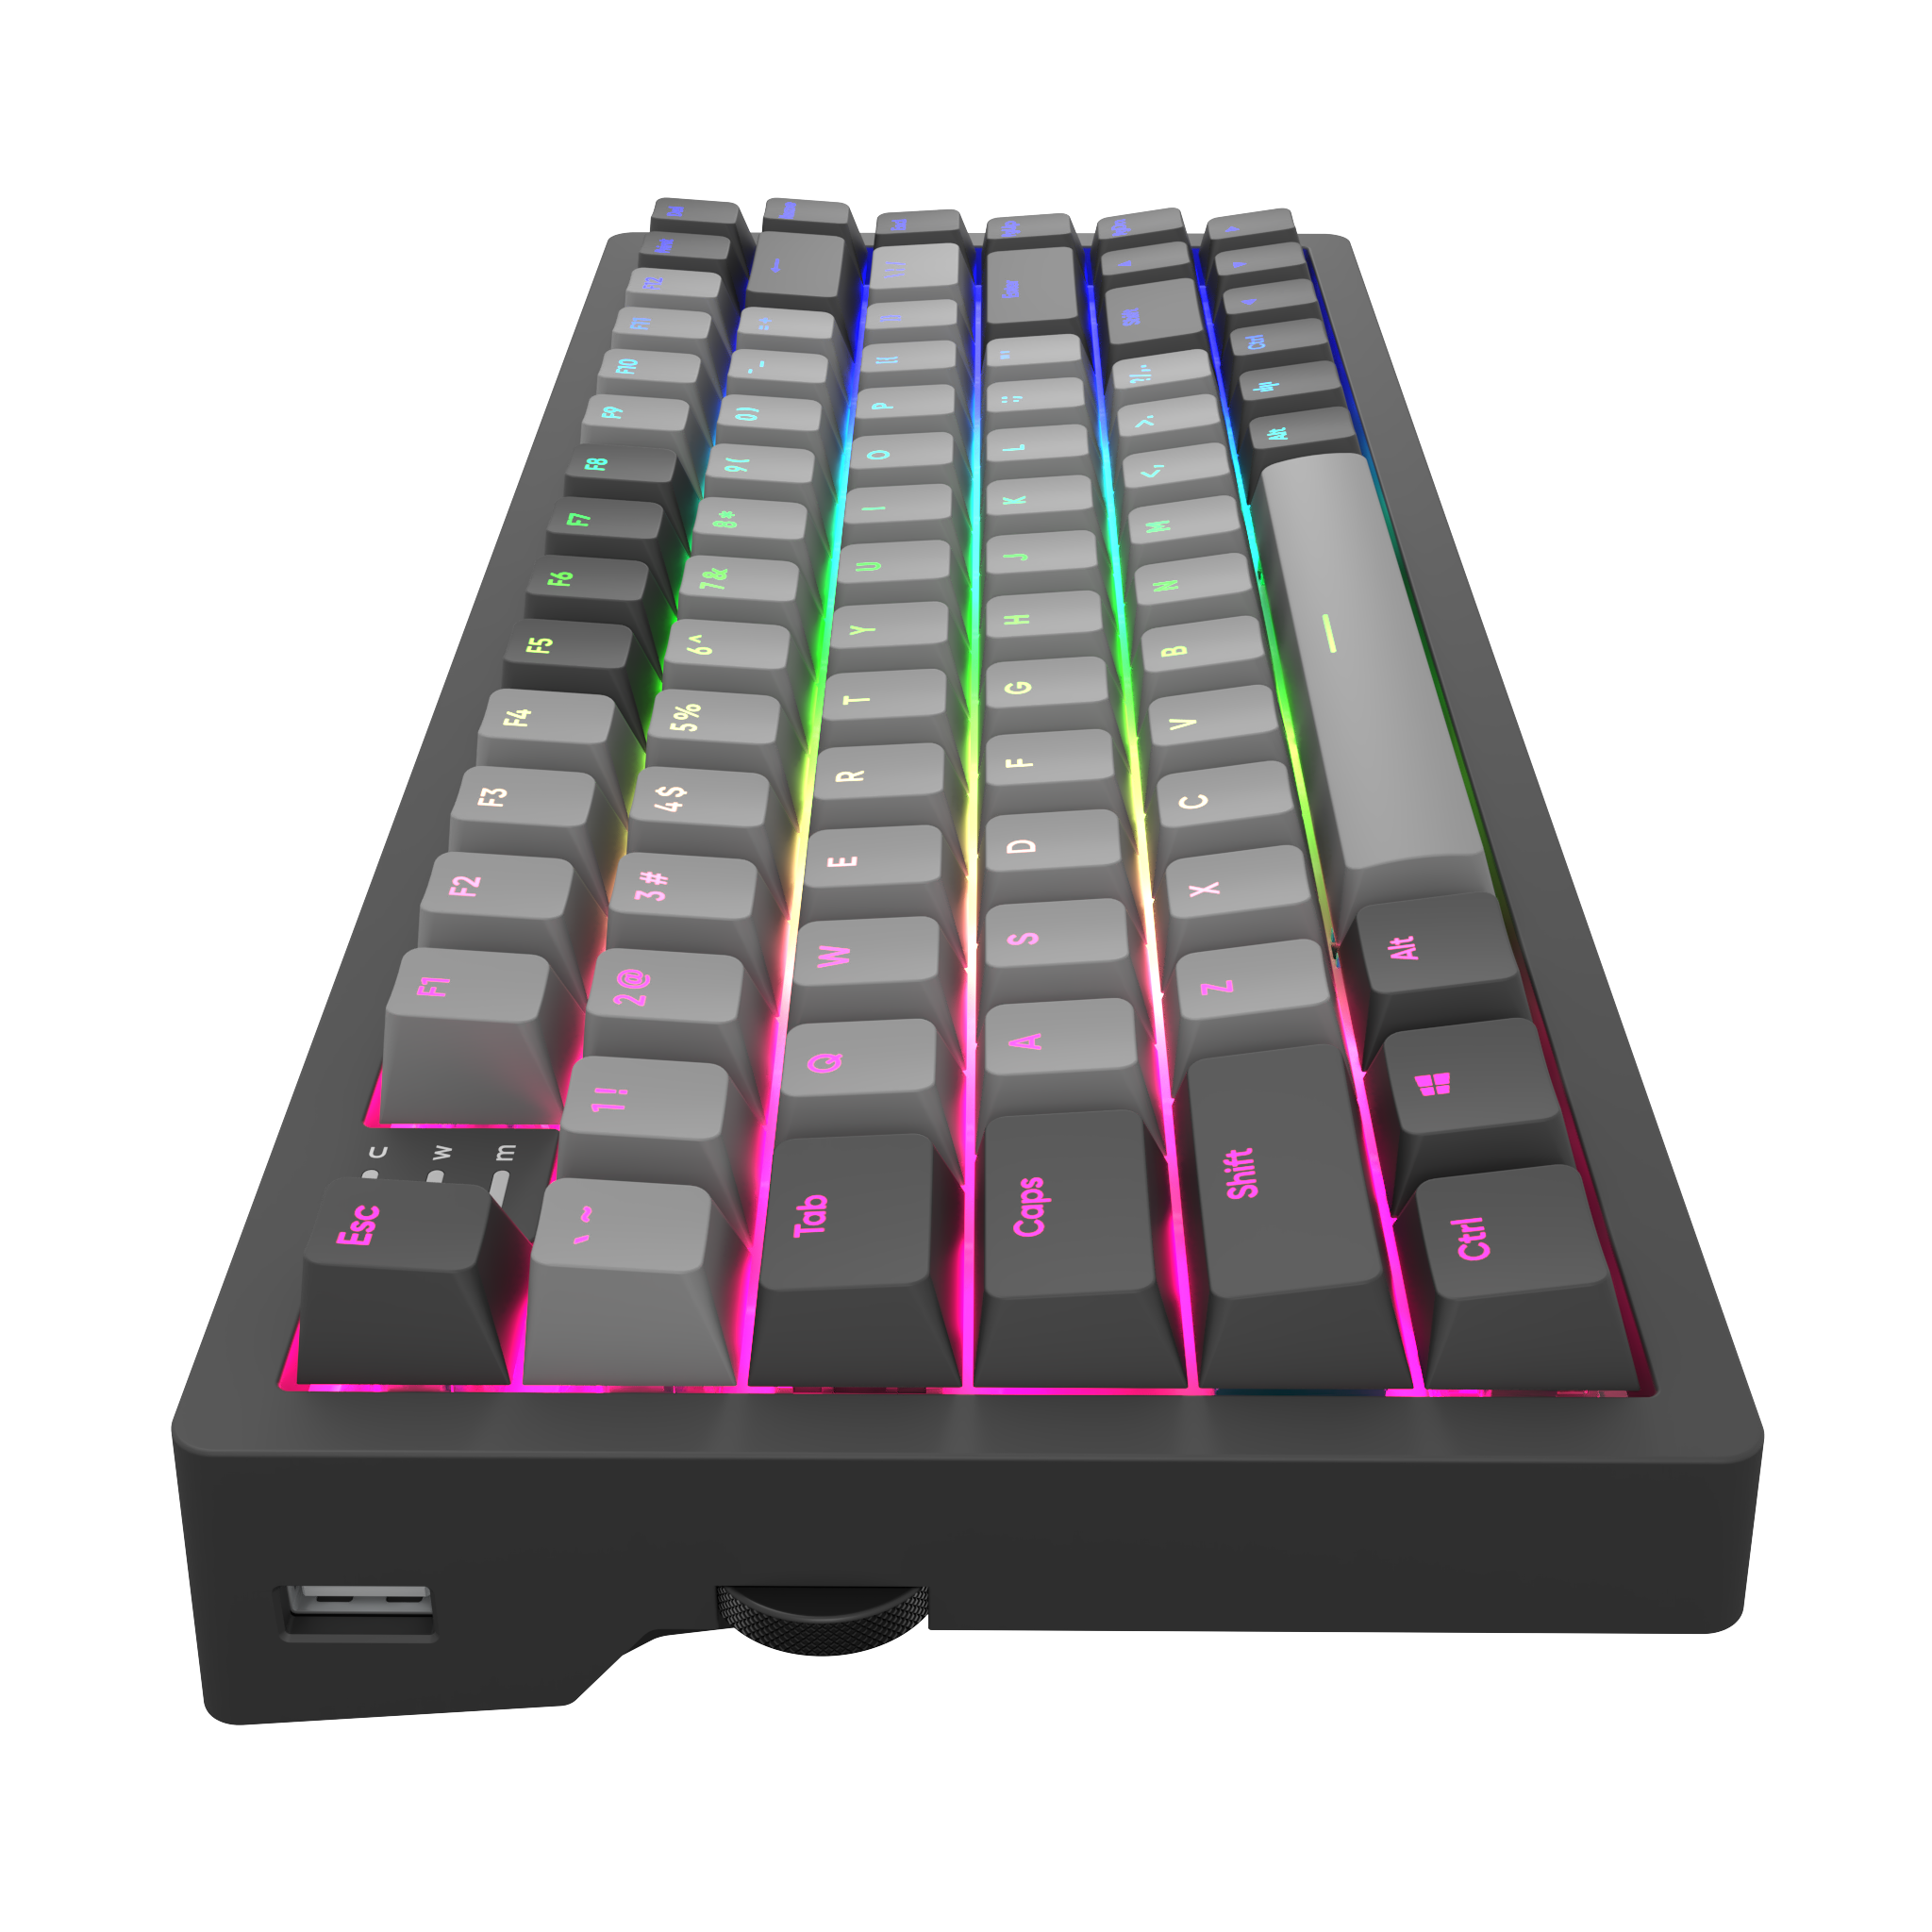 Teal Gateron Black/Grey Mechanisch Cap - Gaming DARK PROJECT (ENG), KD83A Tastatur,